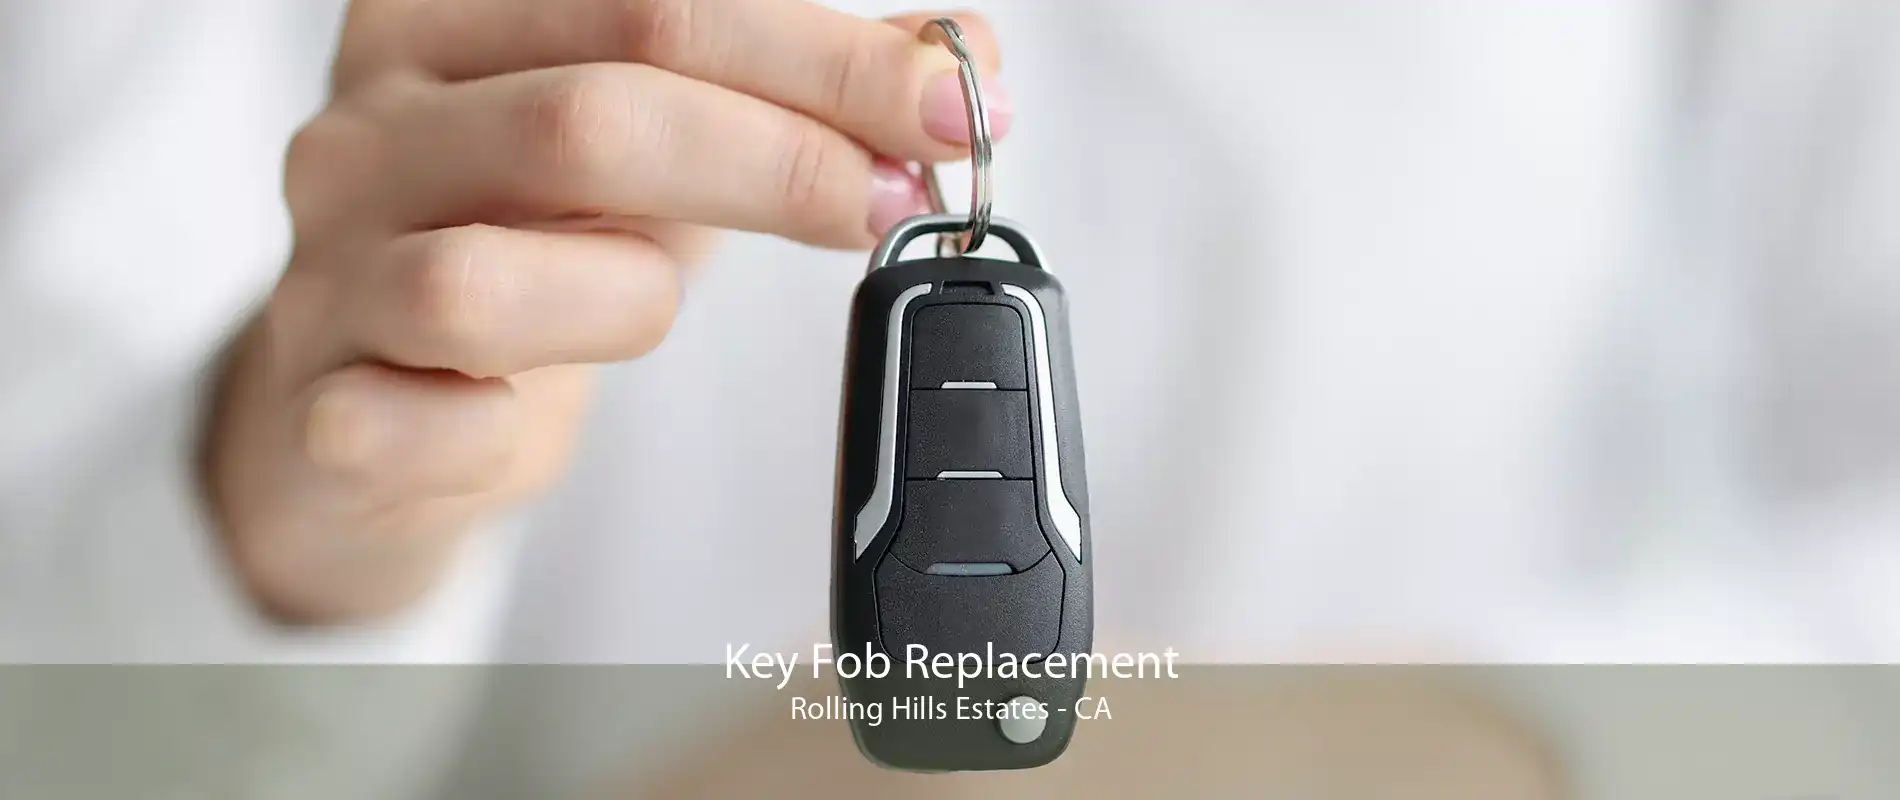 Key Fob Replacement Rolling Hills Estates - CA